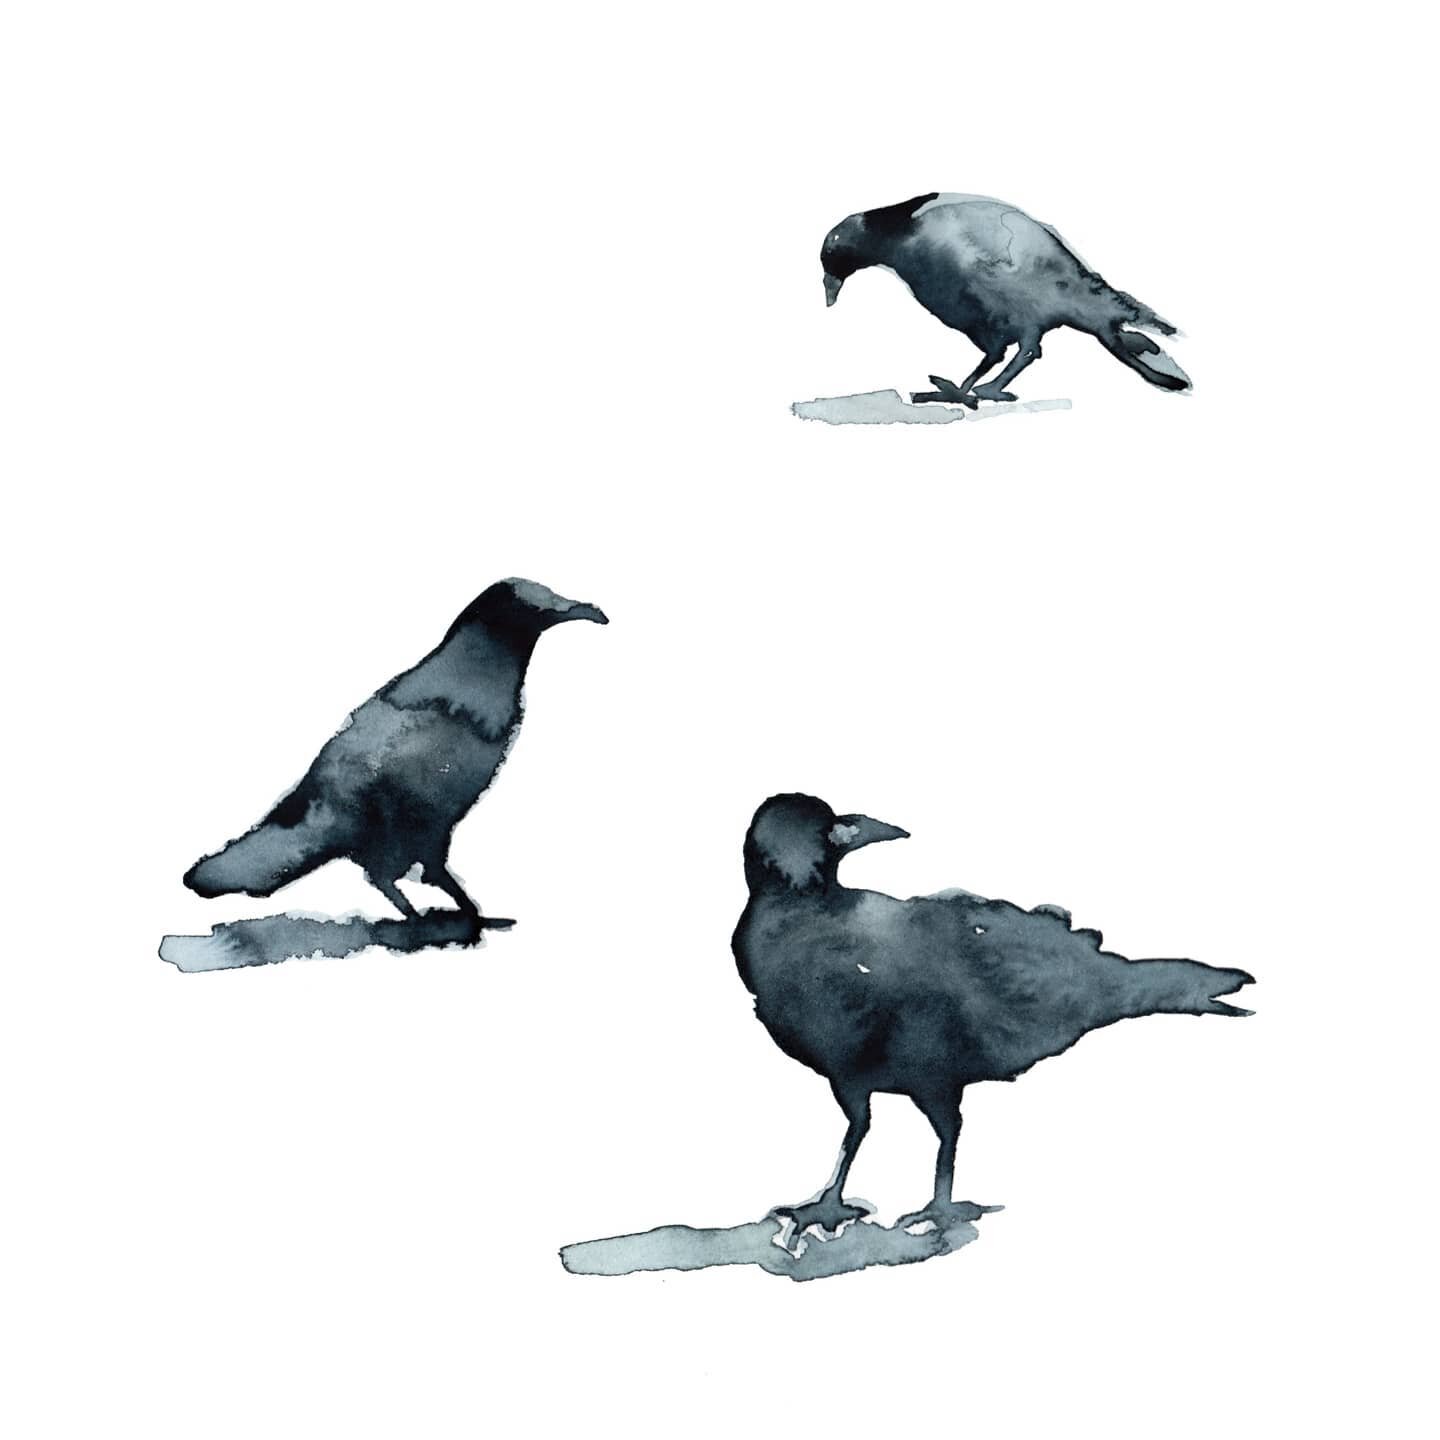 .
.
#illustration #birdillustration #watercolour #watercolor #bird #crow #sketchbook